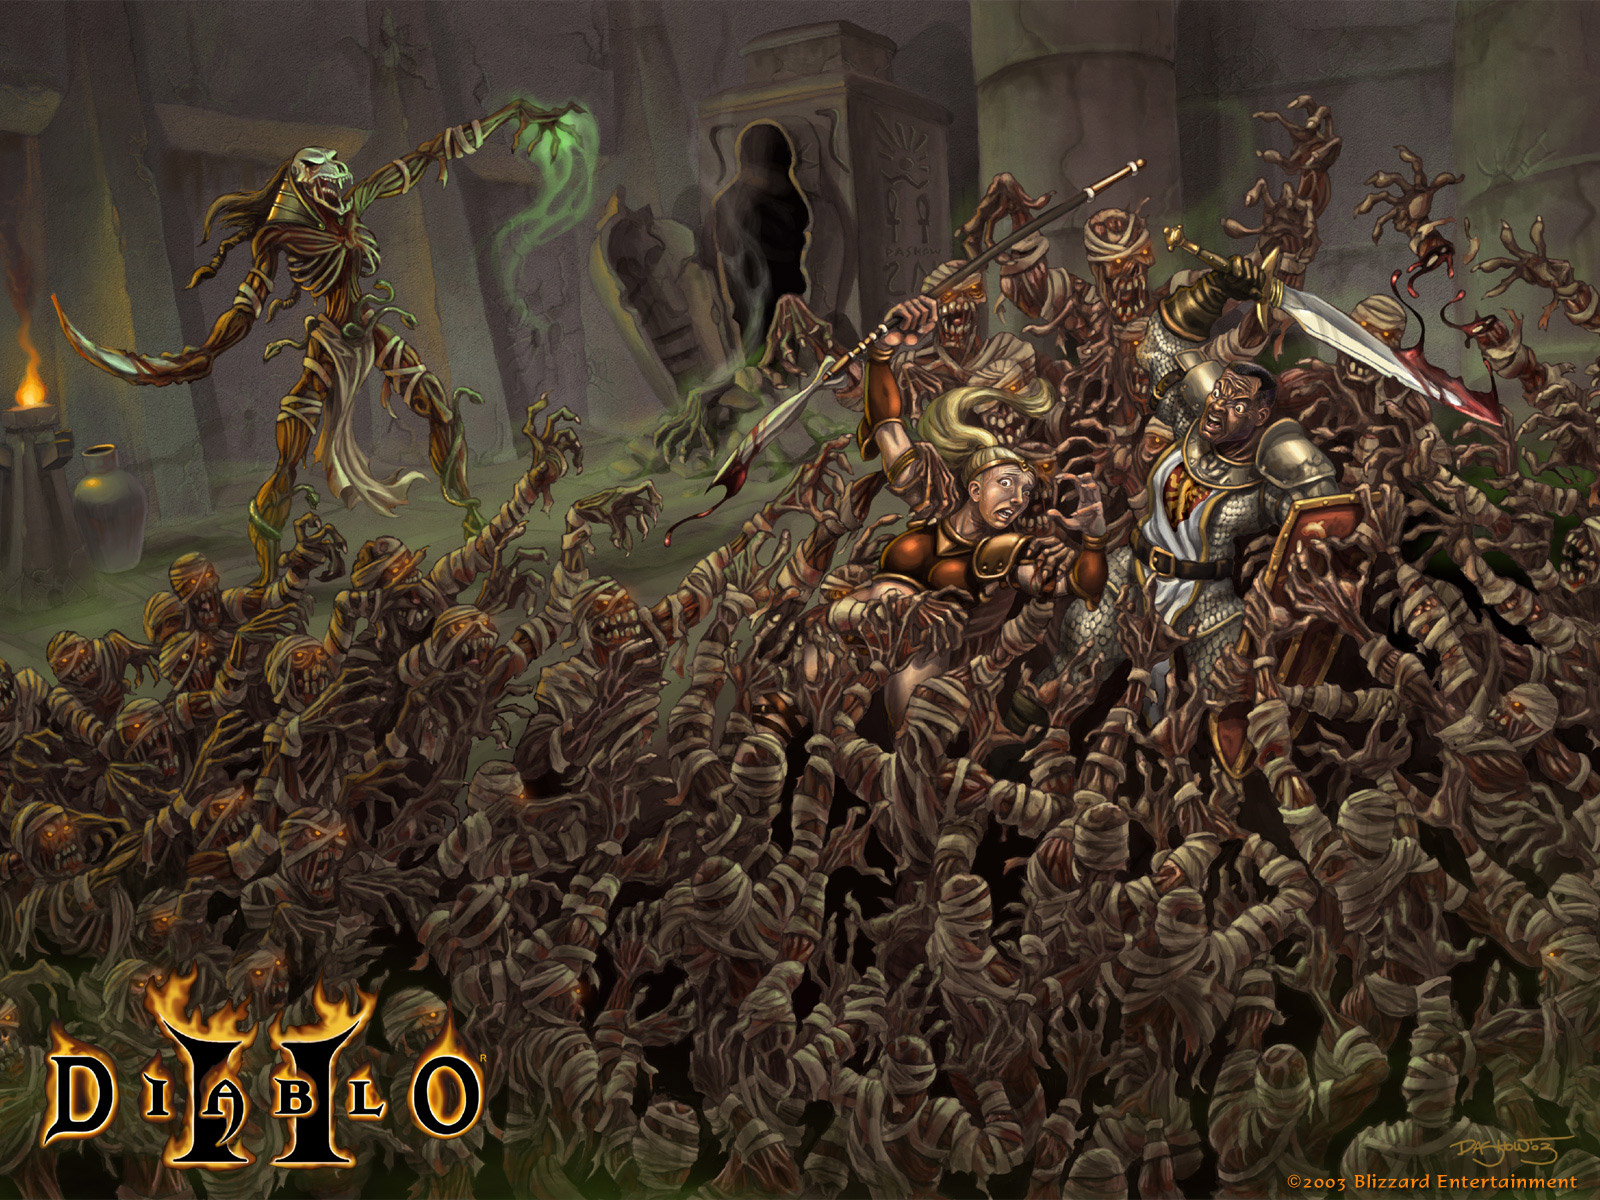 Diablo 2 wallpapers | Diablo 2 stock photos